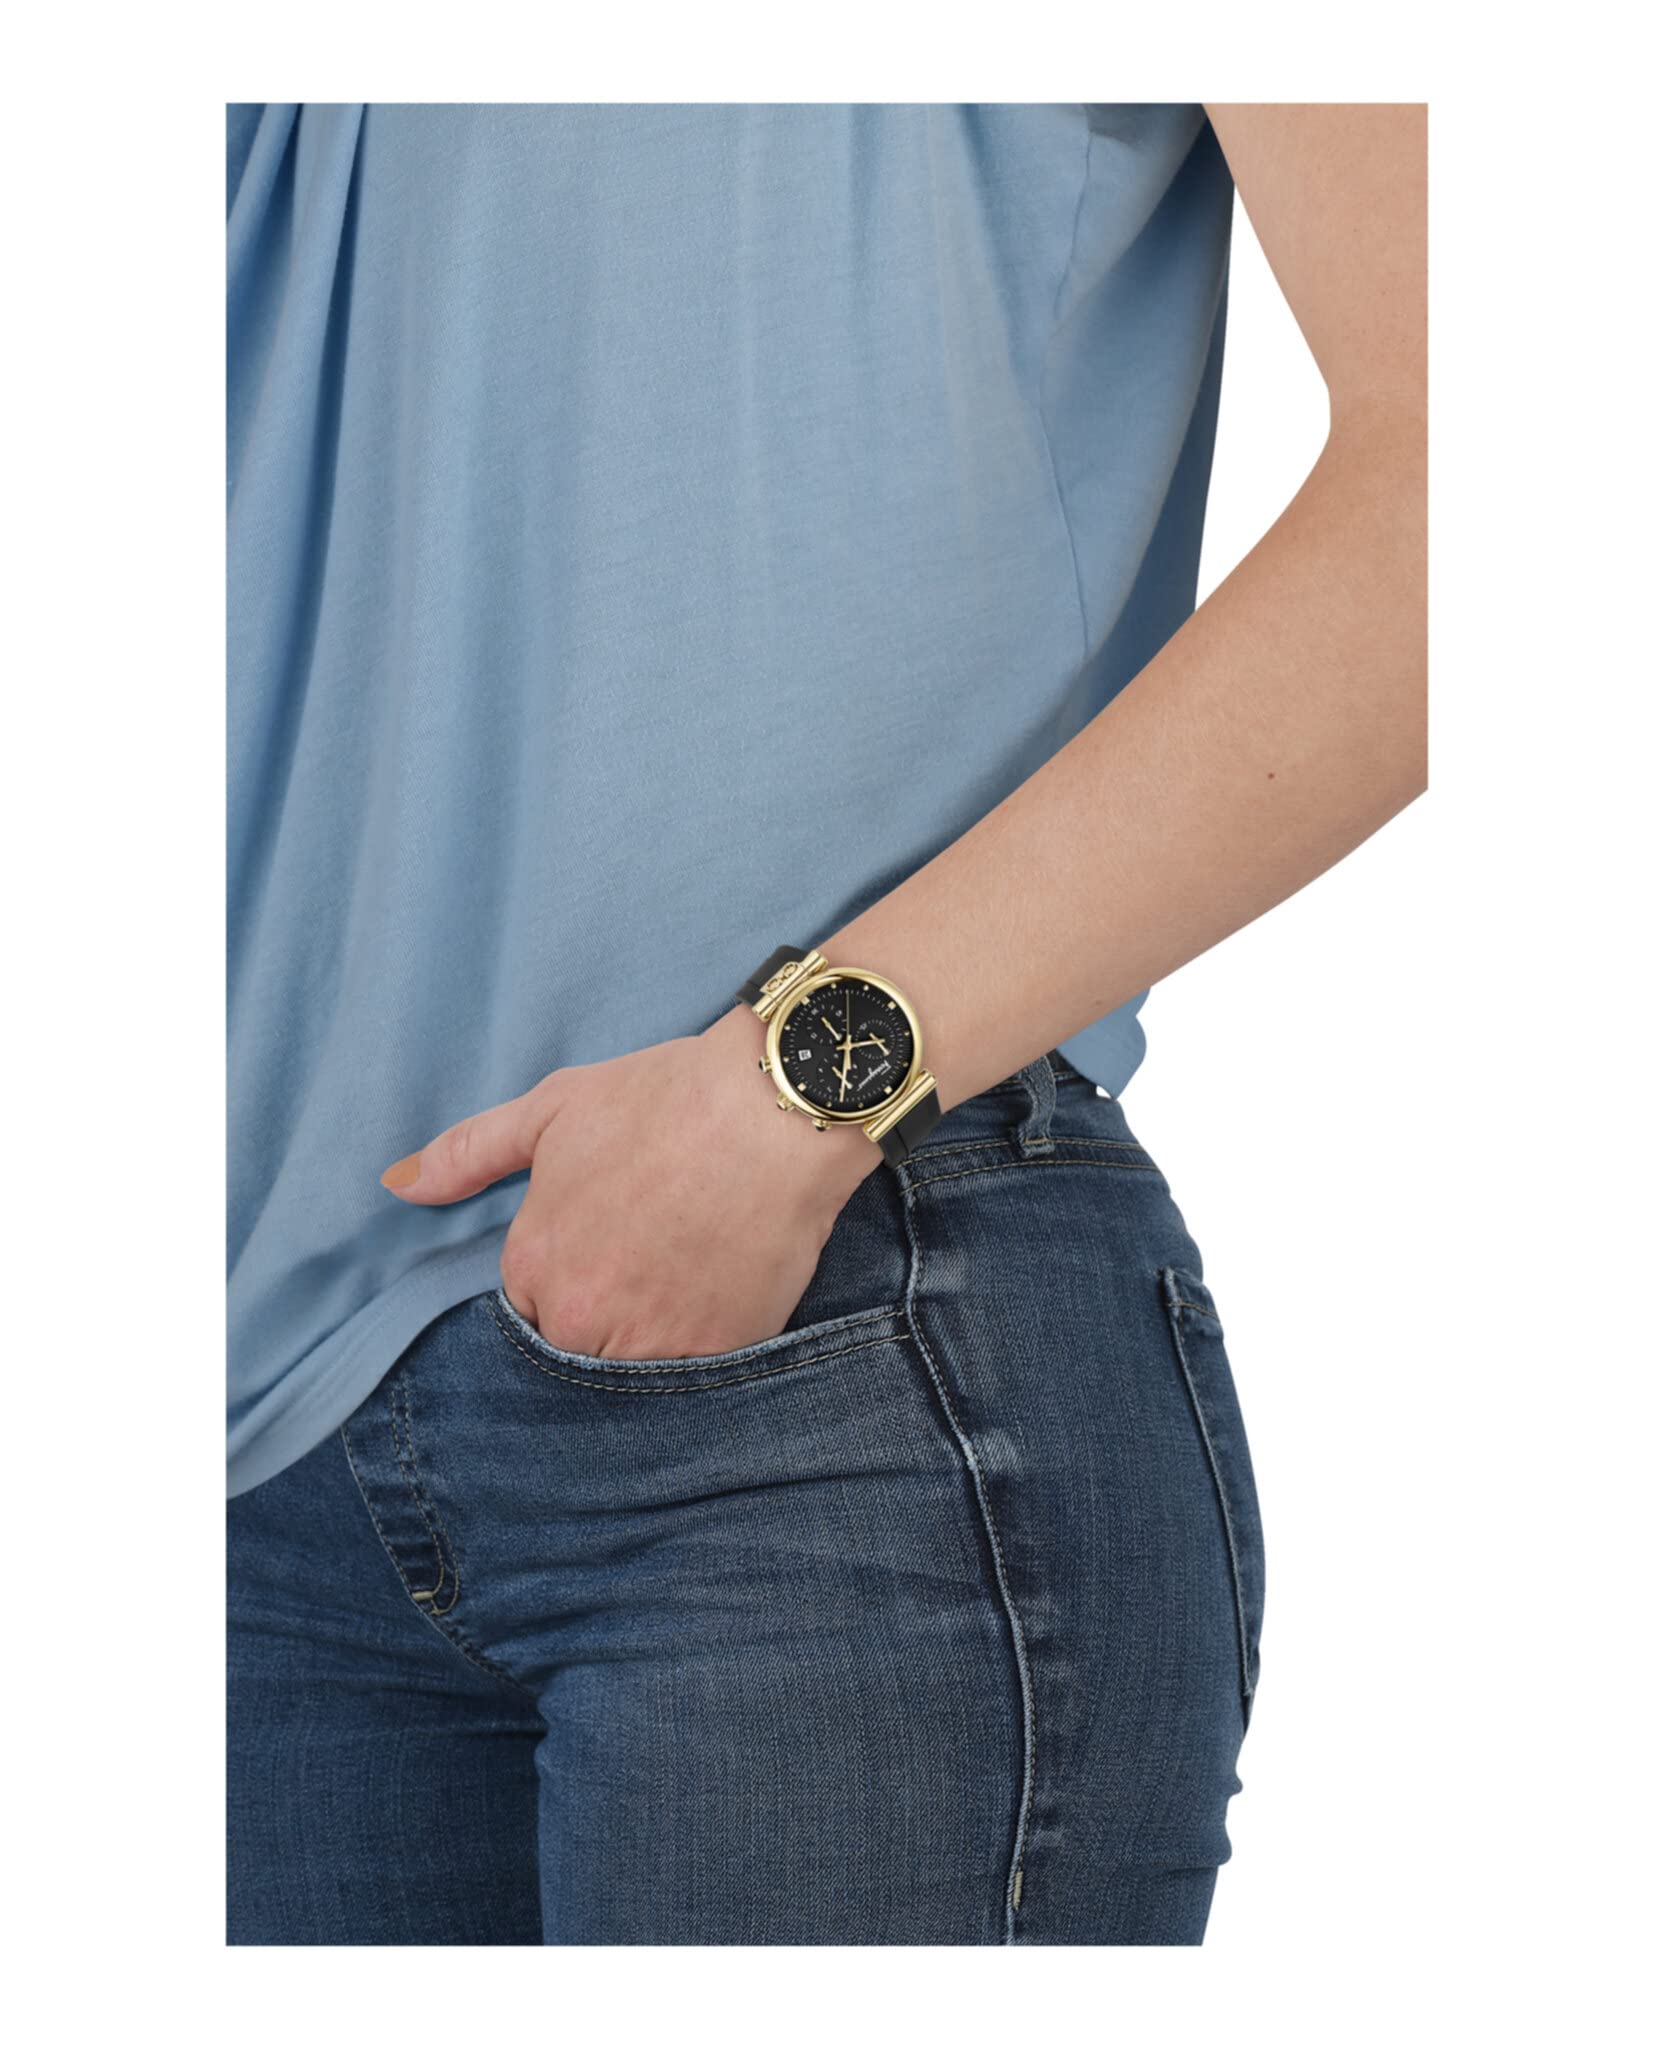 Salvatore Ferragamo Women's Stainless Steel Chronograph Quartz Watch with Silicone Strap, Black, 20 (Model: SFYB00221)